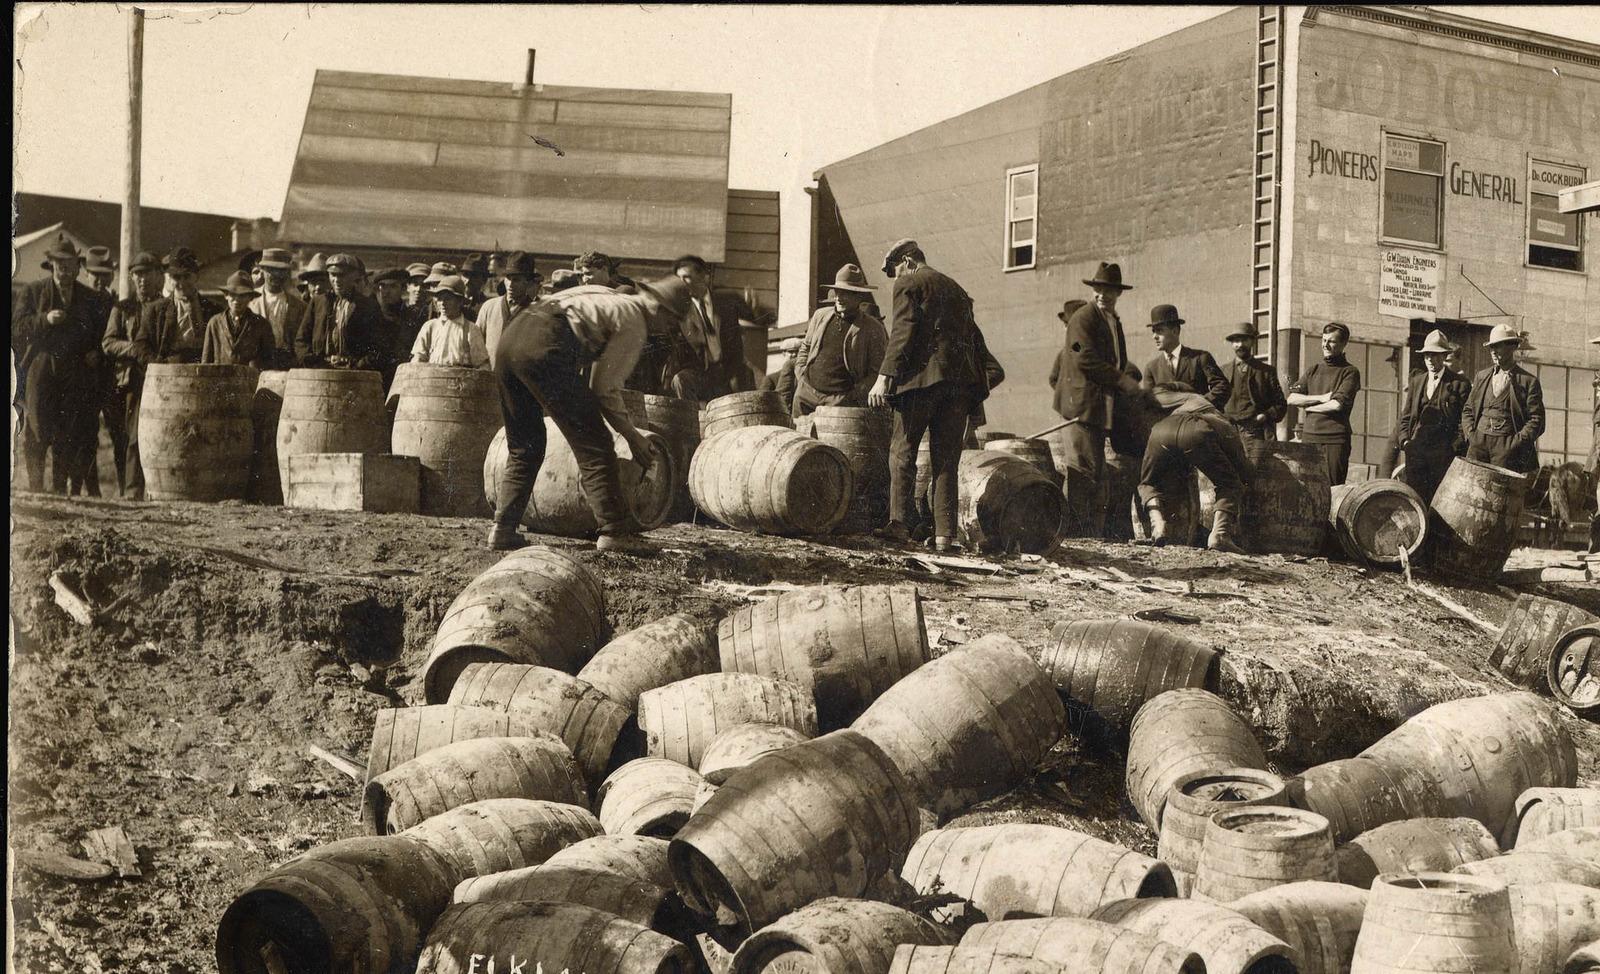 alt="black and white image of barrels during US prohibition"